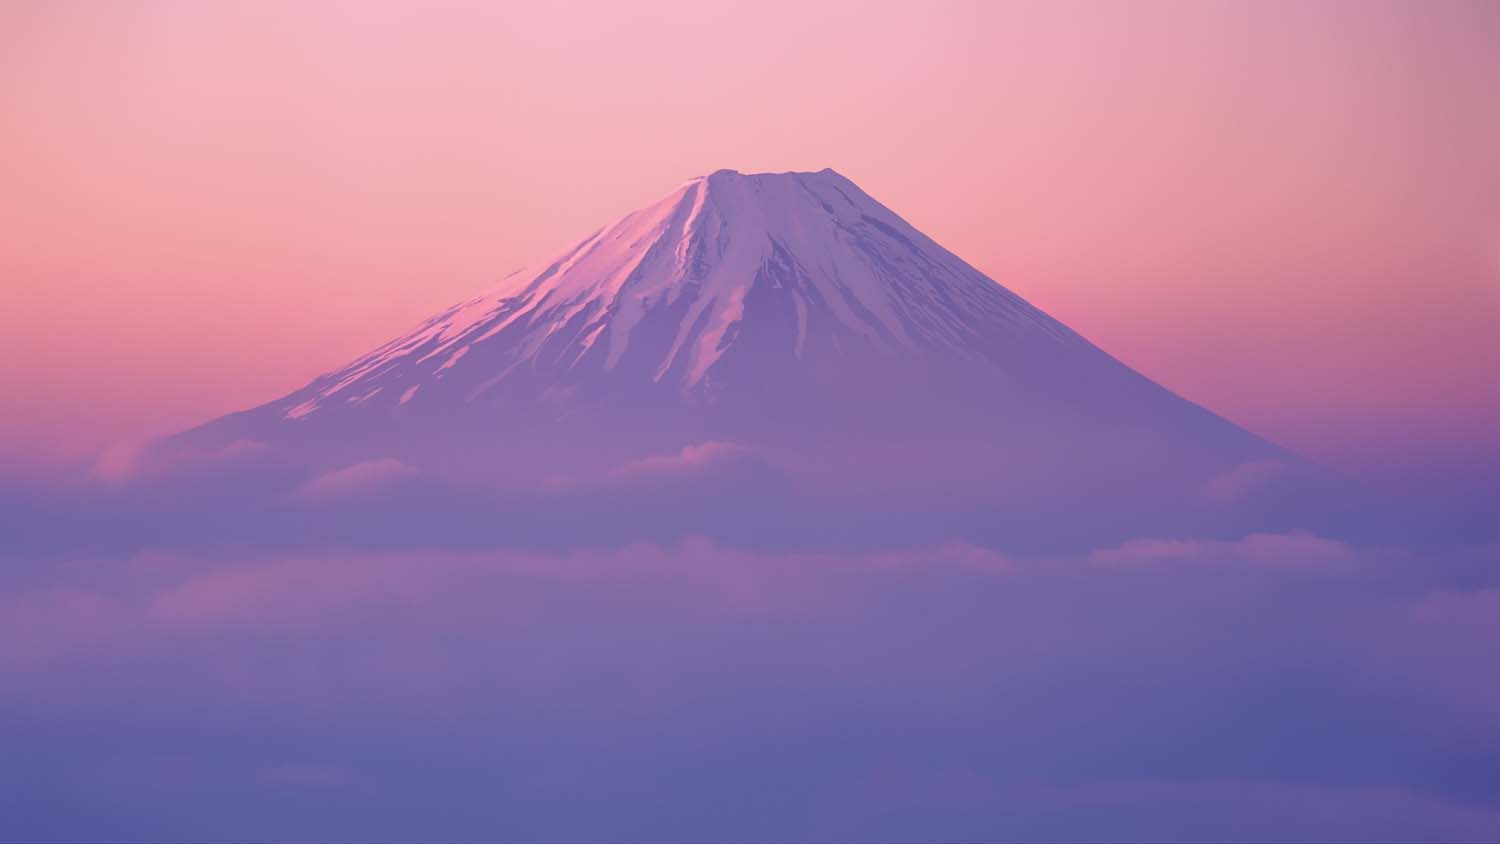 Mount Fuji, Mac OS X Lion macbook wallpaper